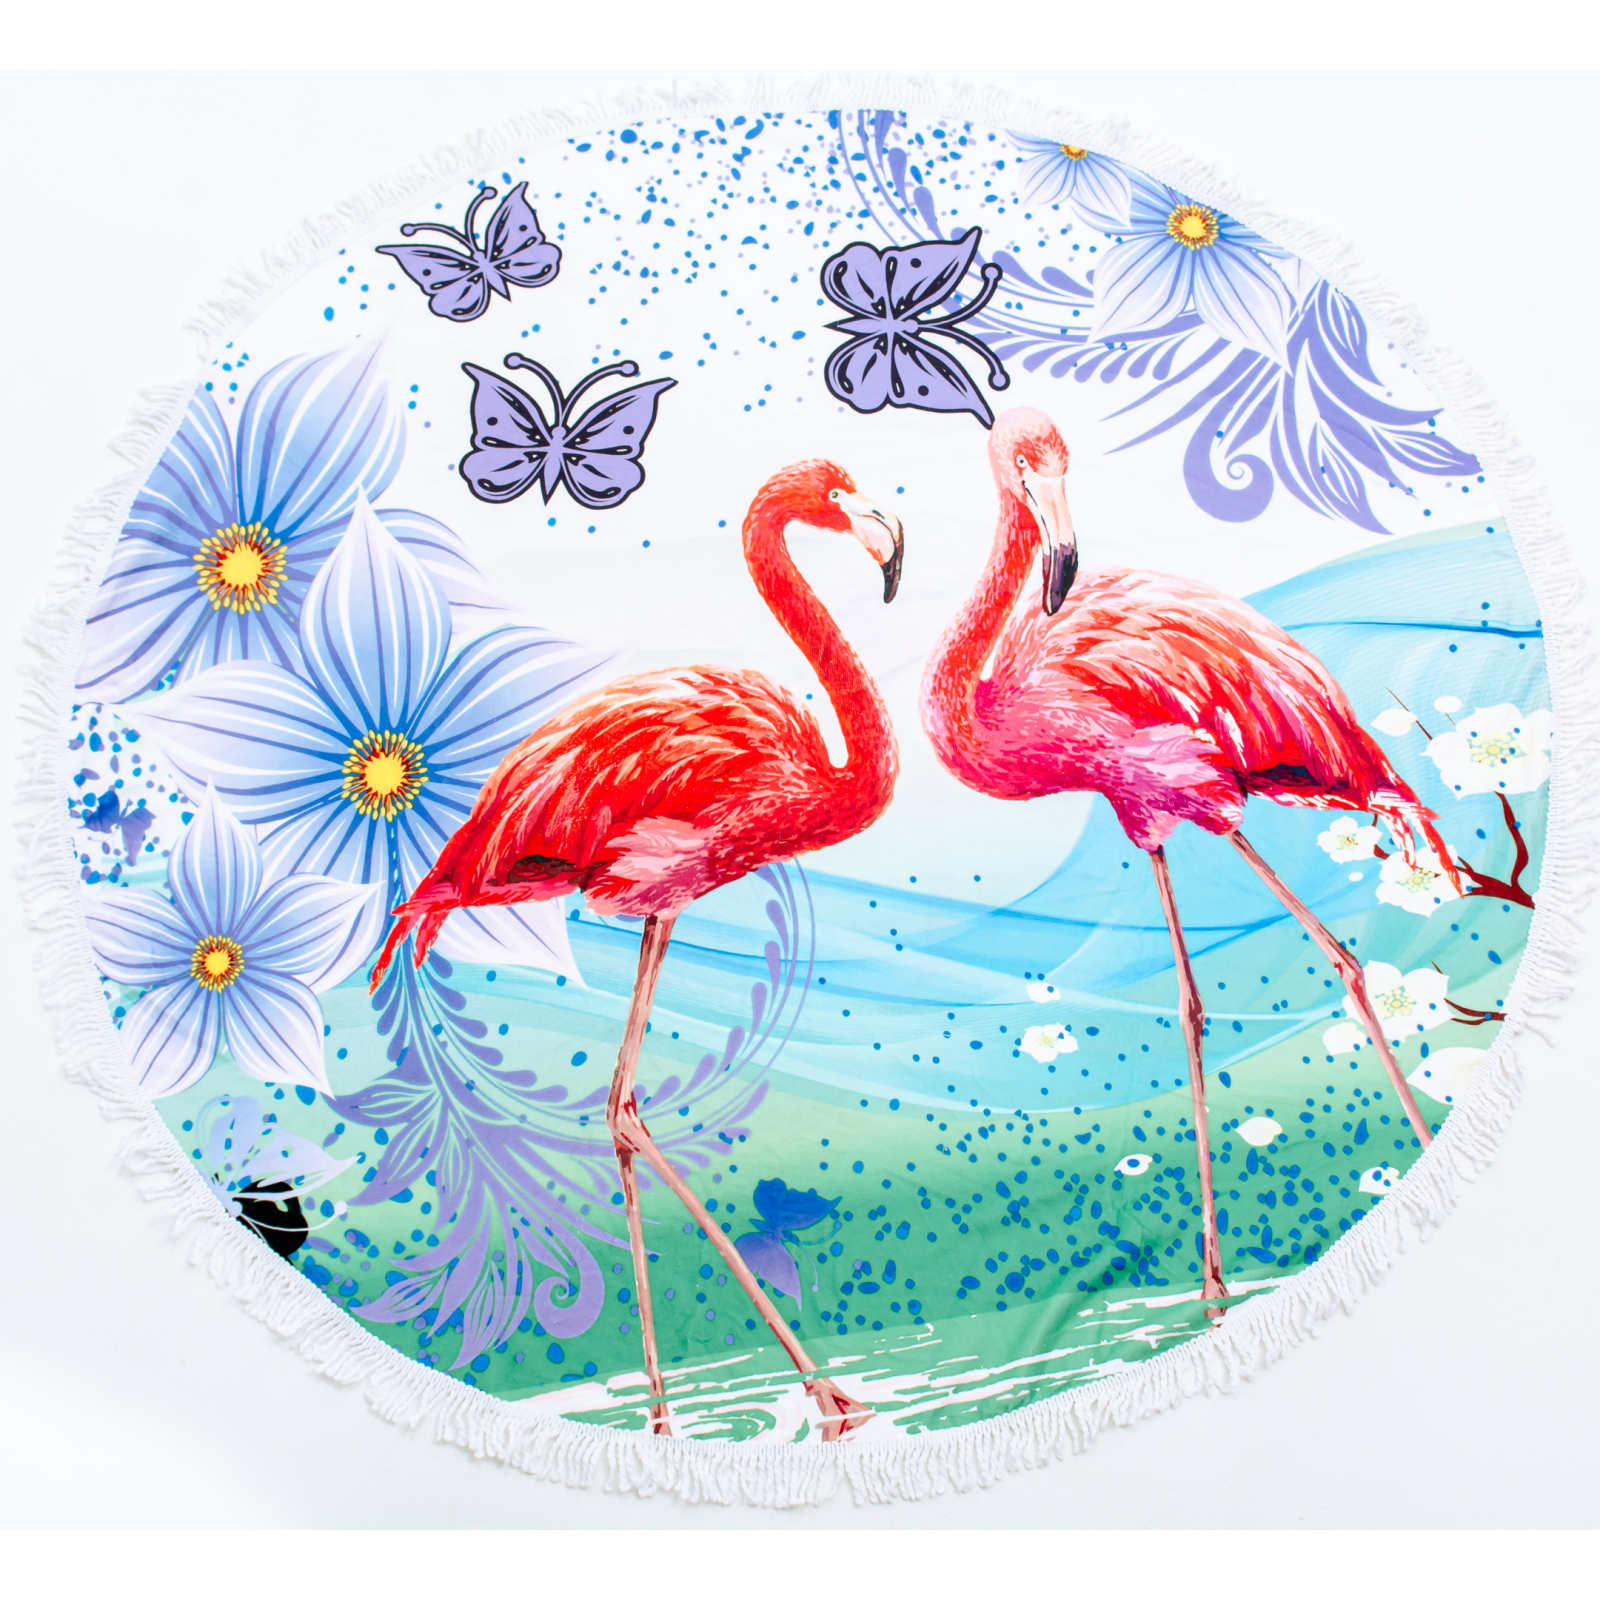 Полотенце MirSon пляжное №5053 Summer Time Bright flamingo 150x150 см (2200003180664)